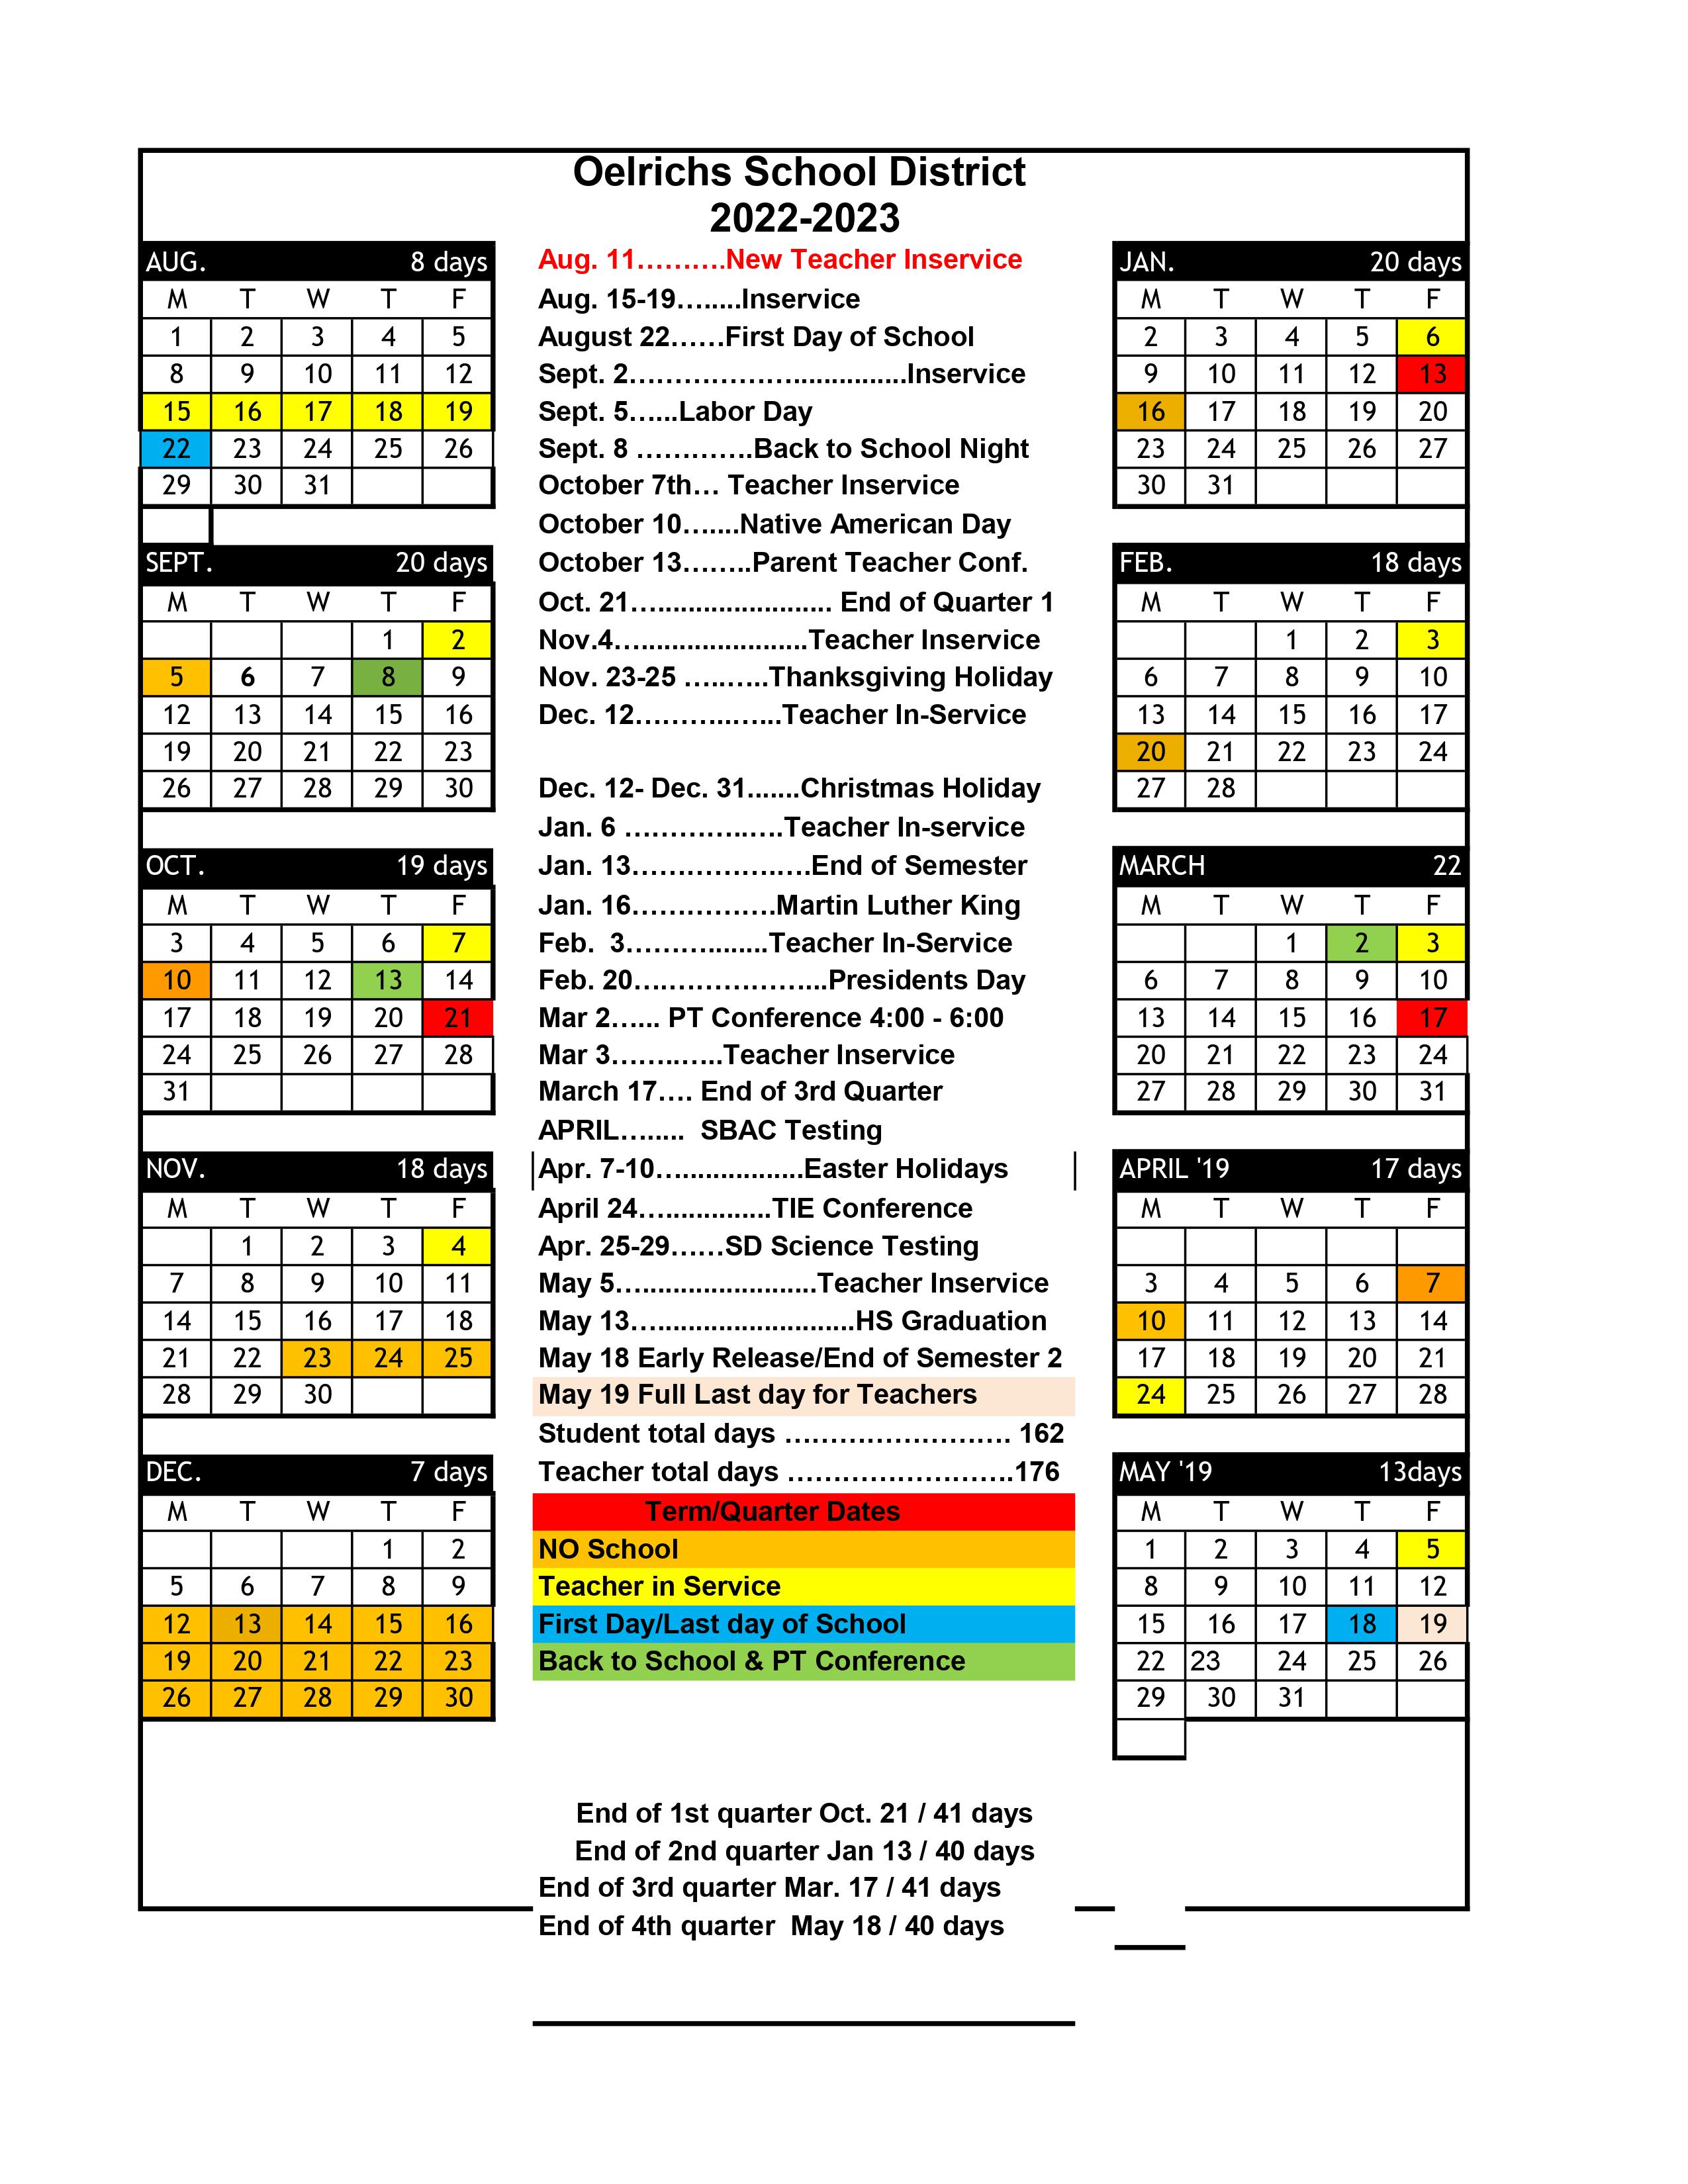 22-23 School Calendar pic.jpg